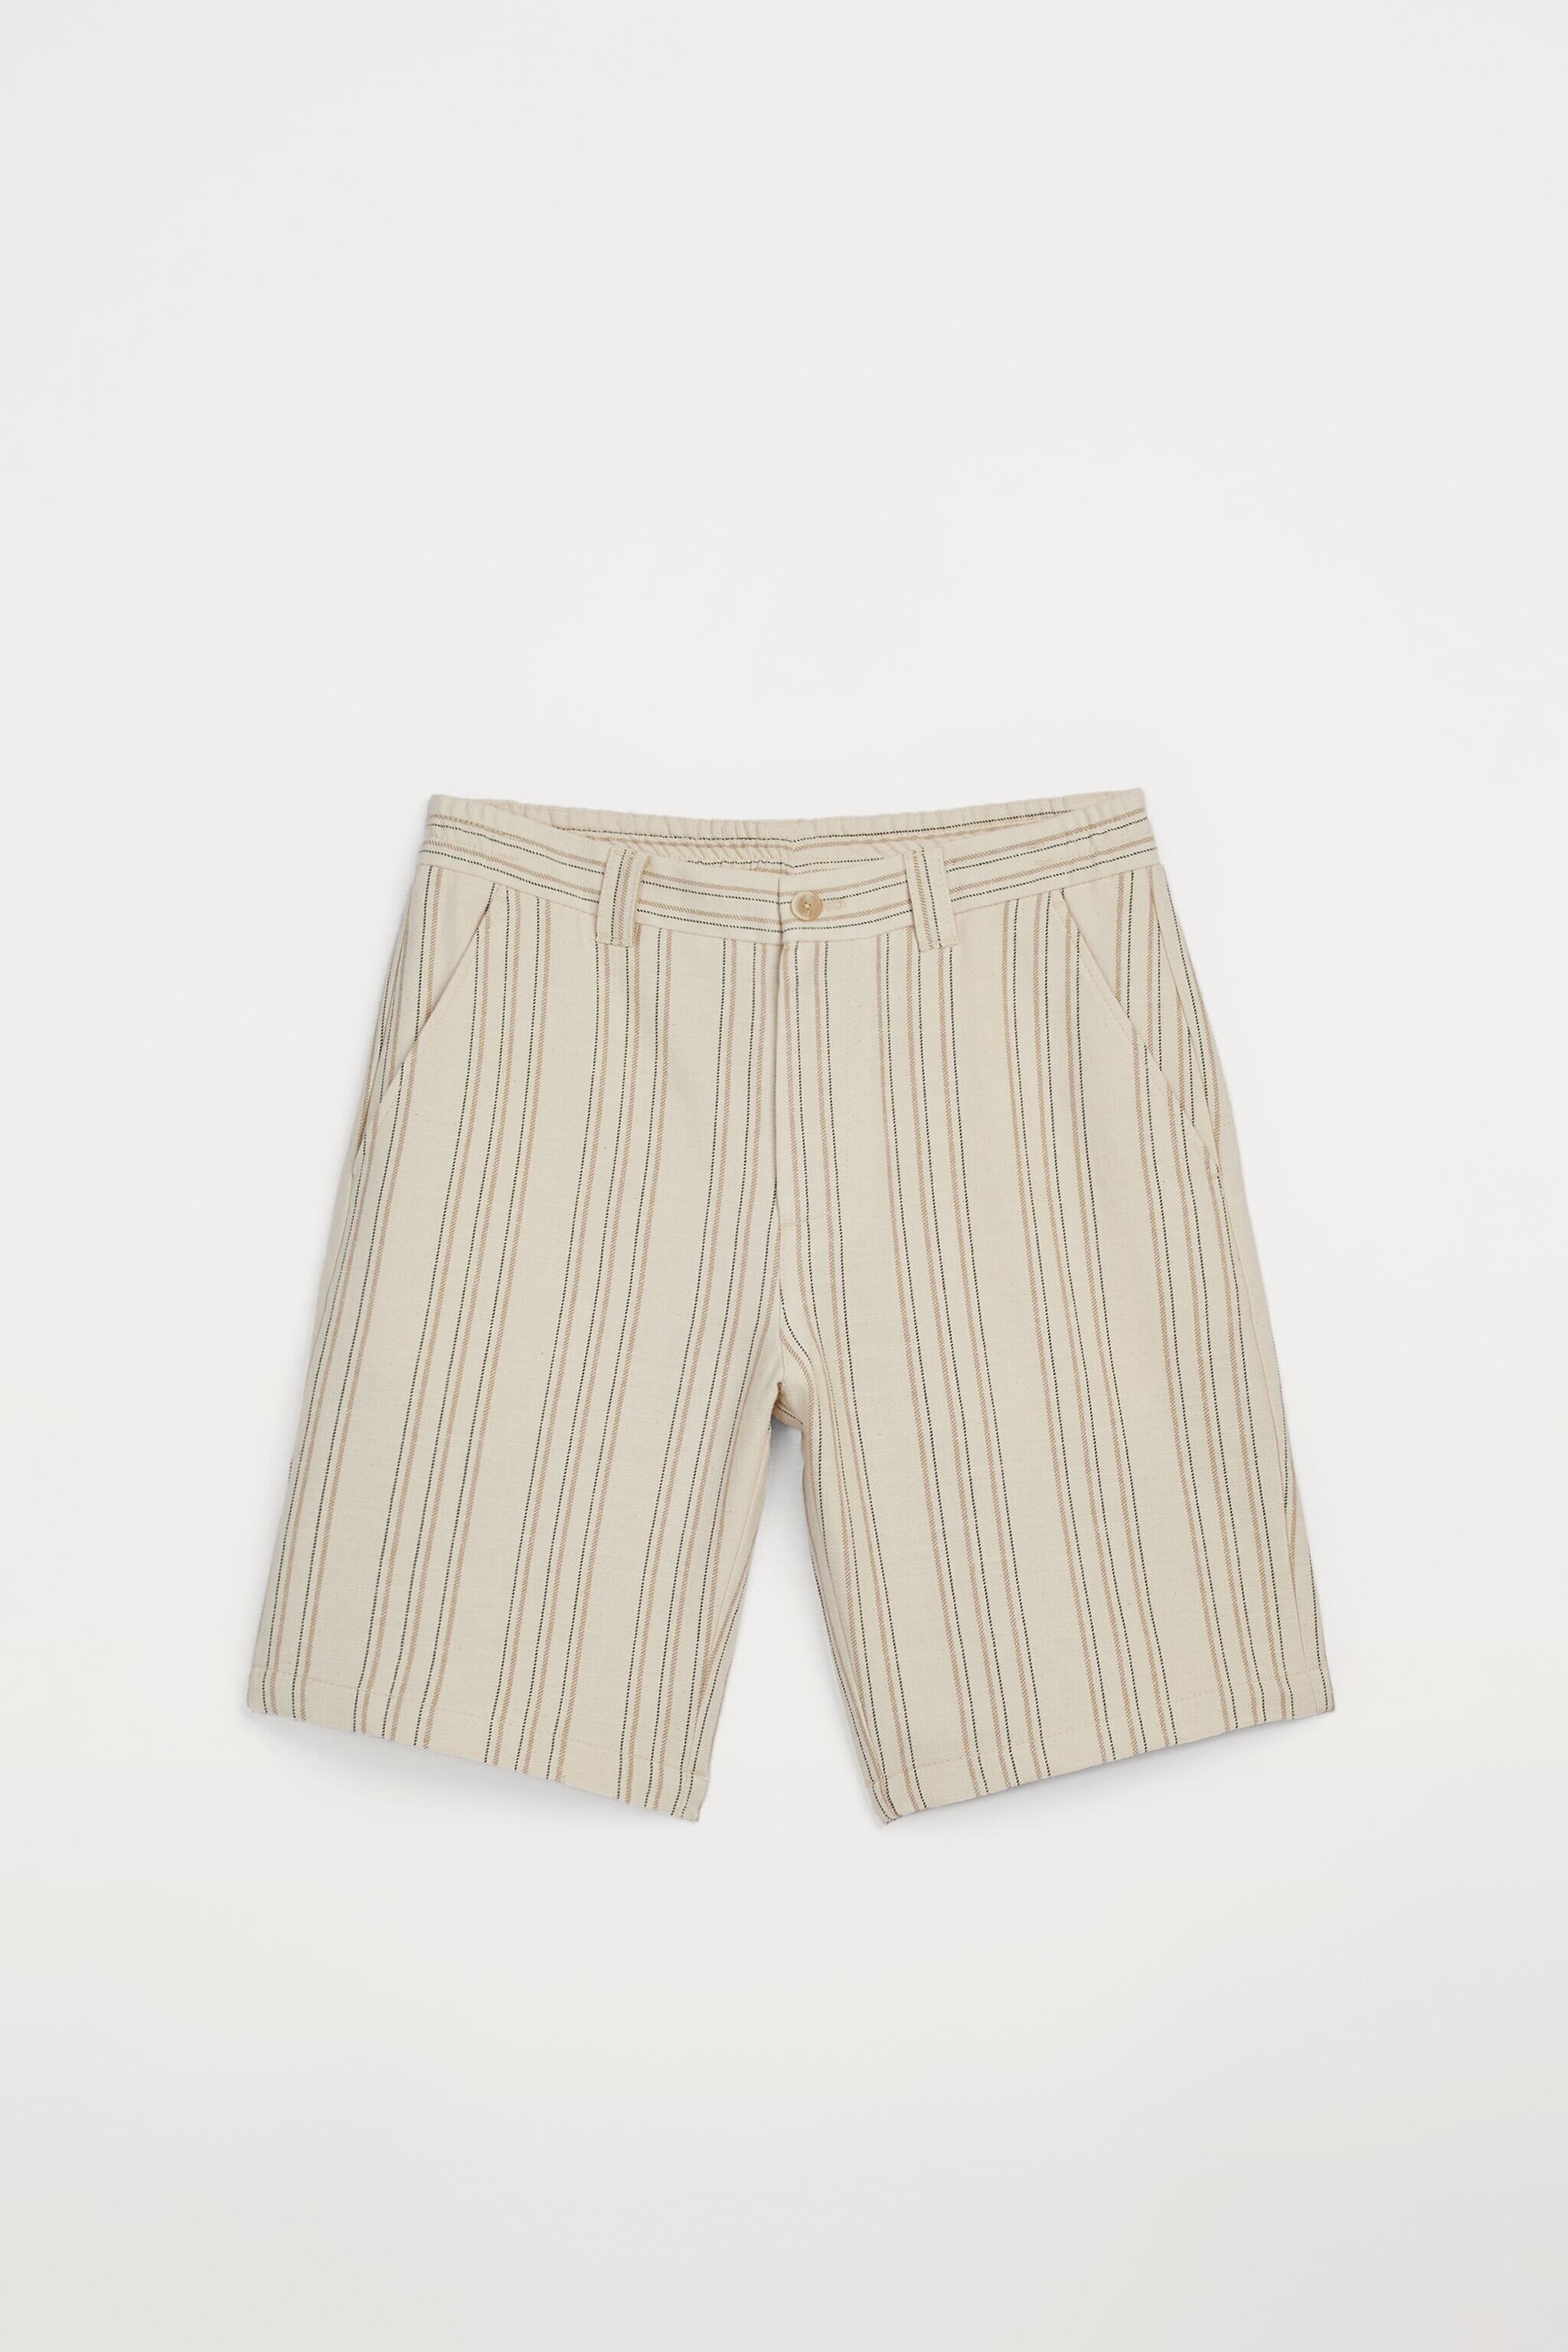 Striped Bermuda Shorts, ₱1,595